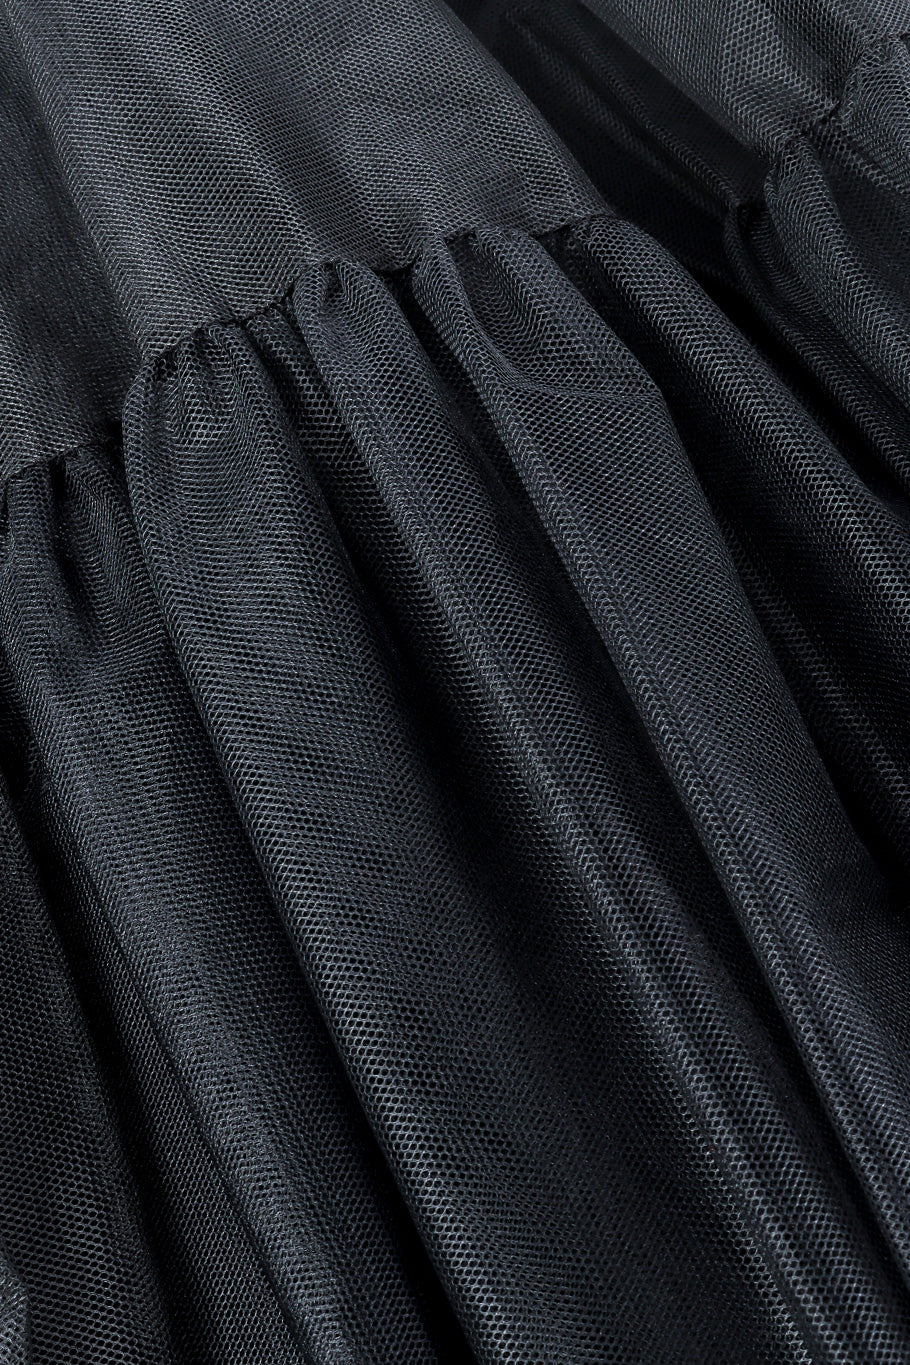 Petticoat skirt by Morgane Le Fay mesh close @recessla